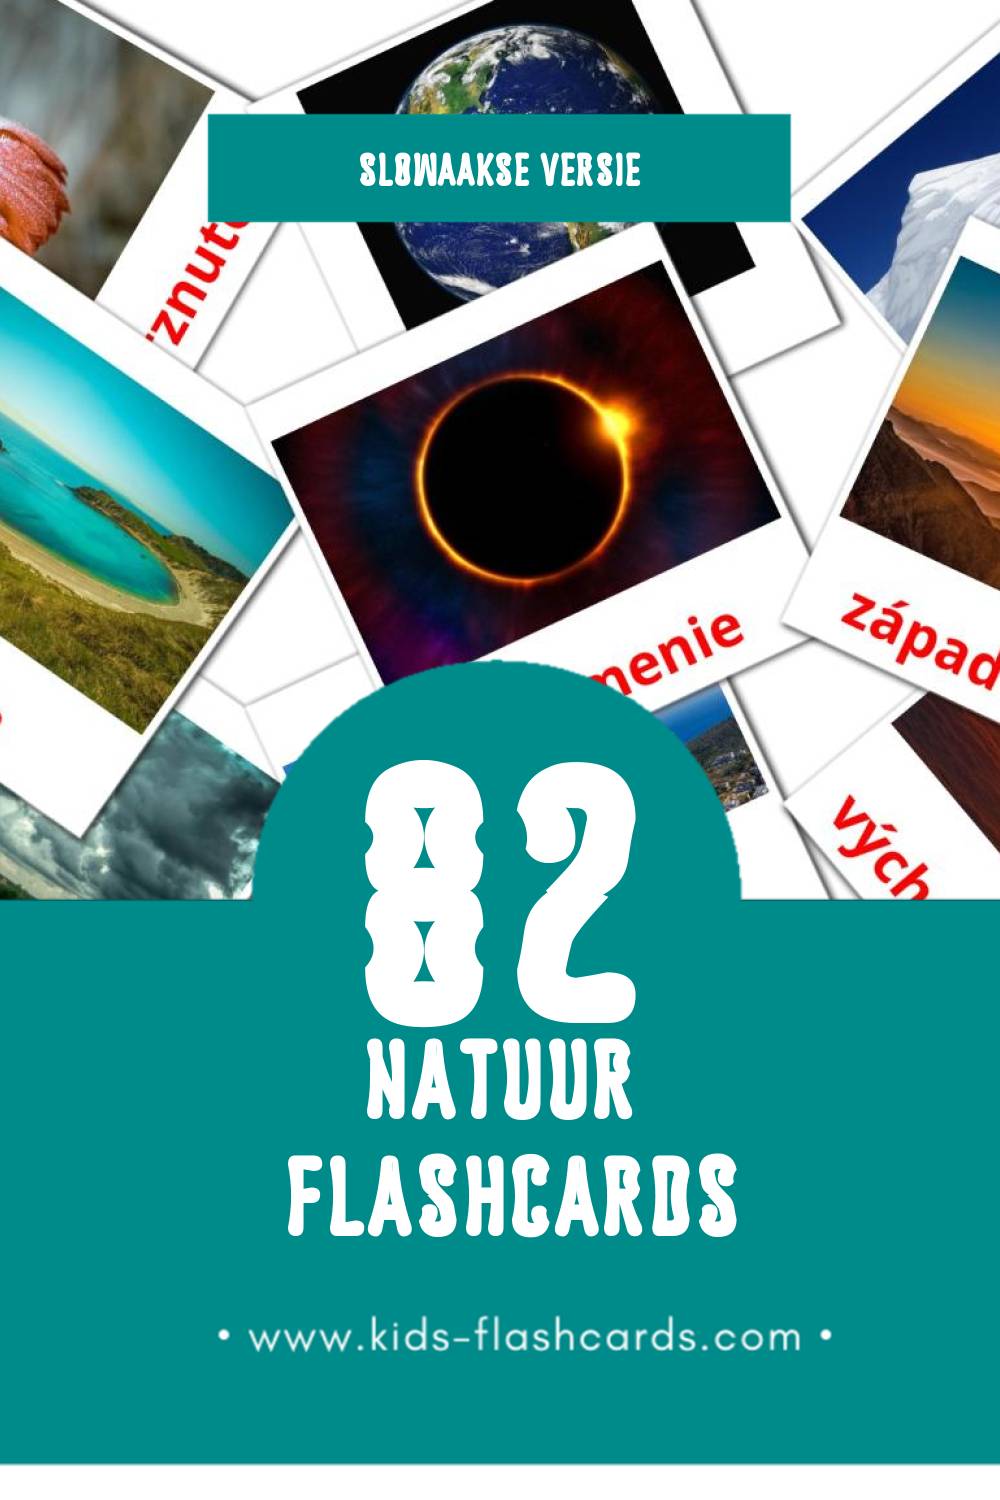 Visuele Príroda Flashcards voor Kleuters (82 kaarten in het Slowaaks)